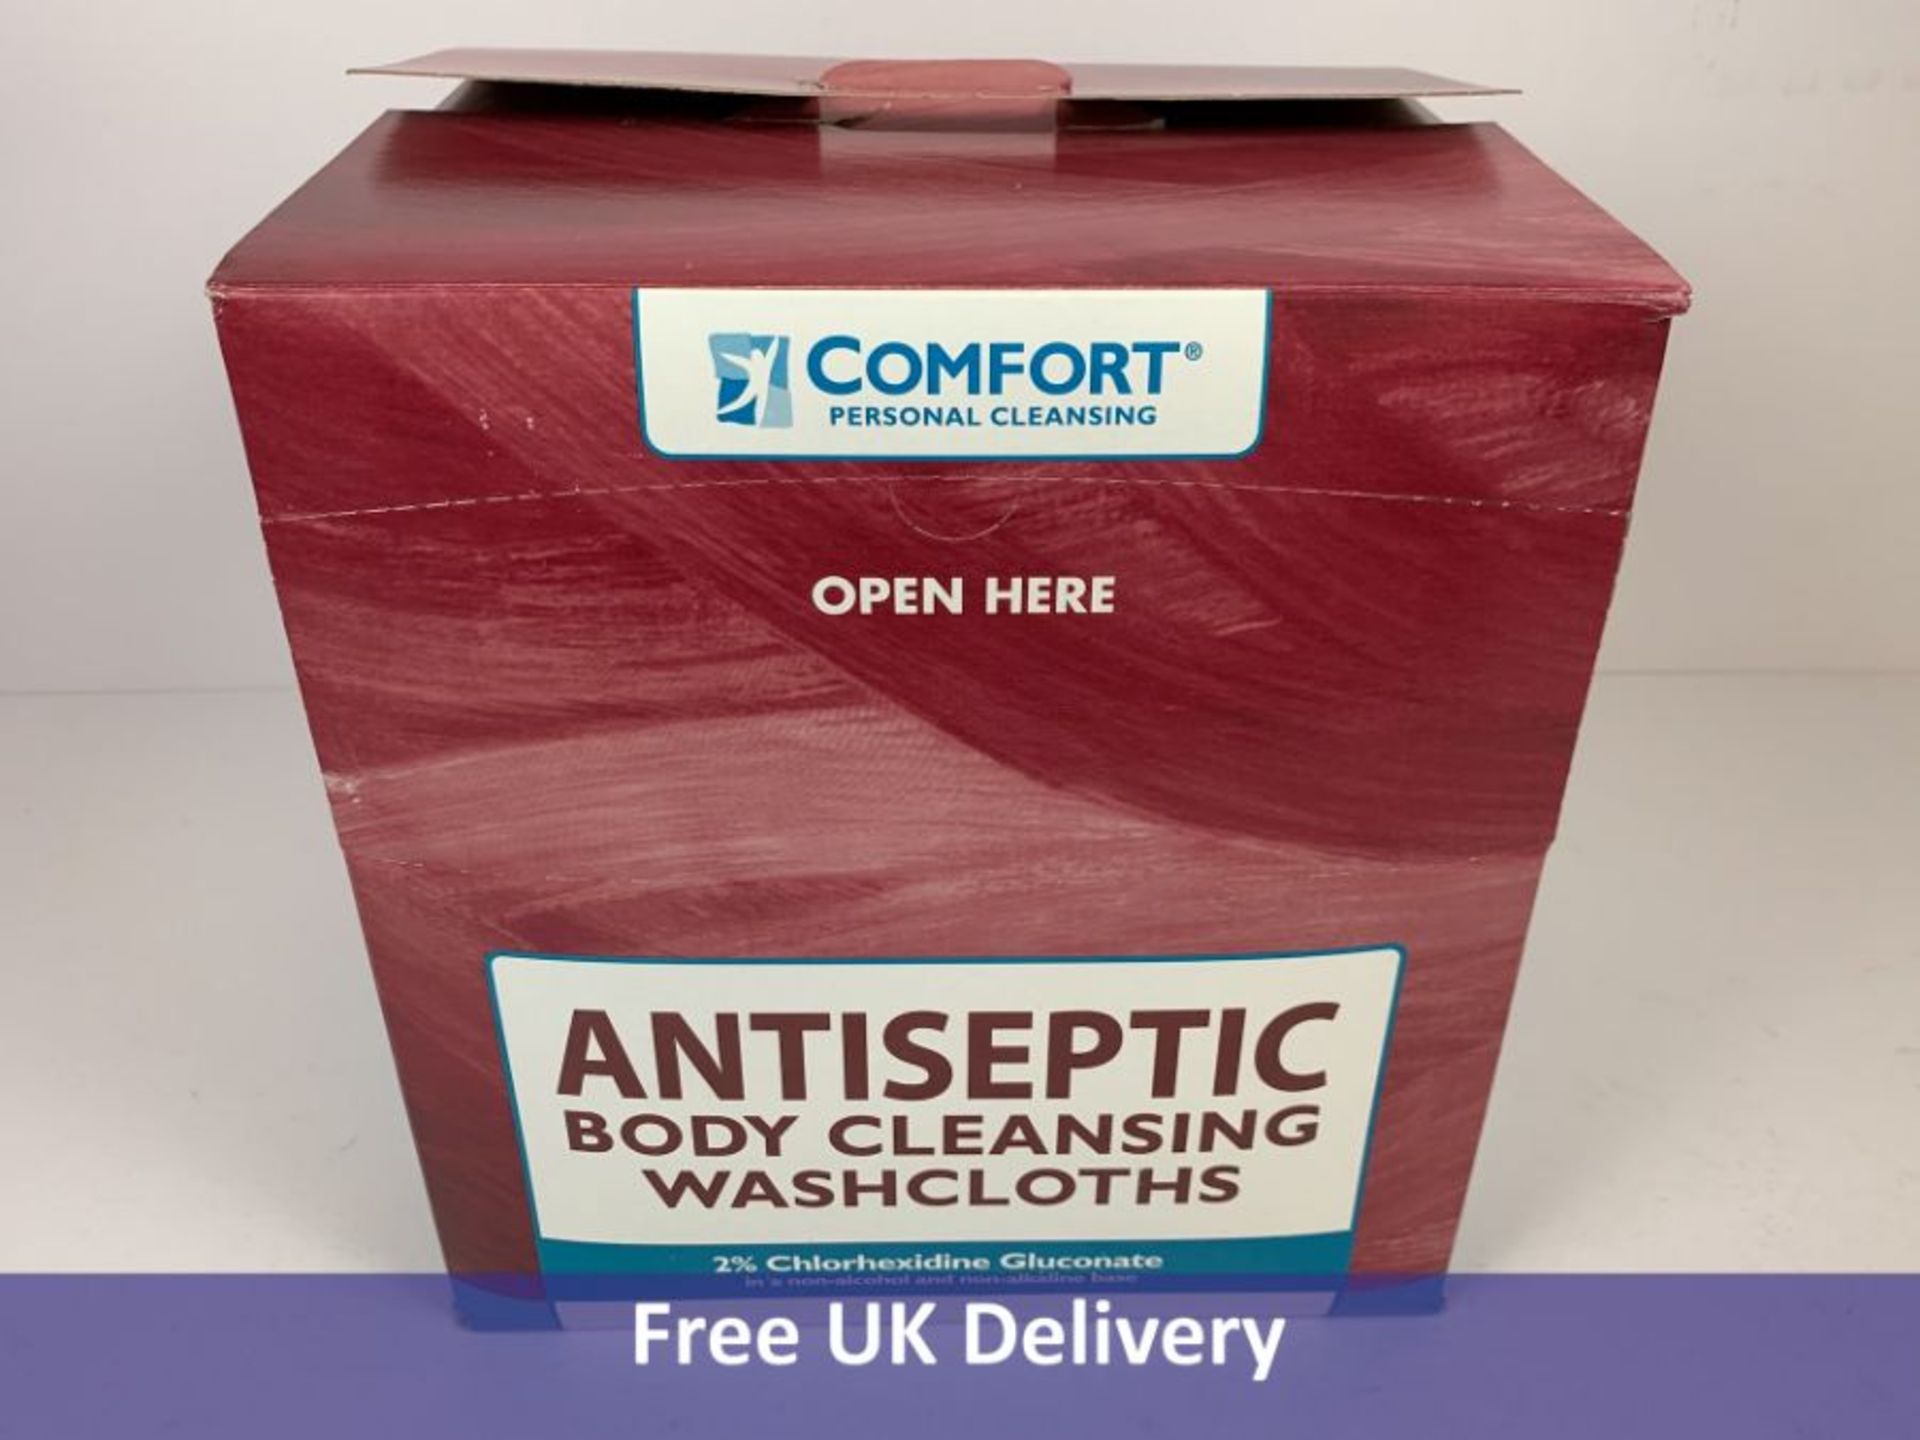 Twenty Packs of 6 Comfort Personal Antiseptic Body Cleansing Washcloths